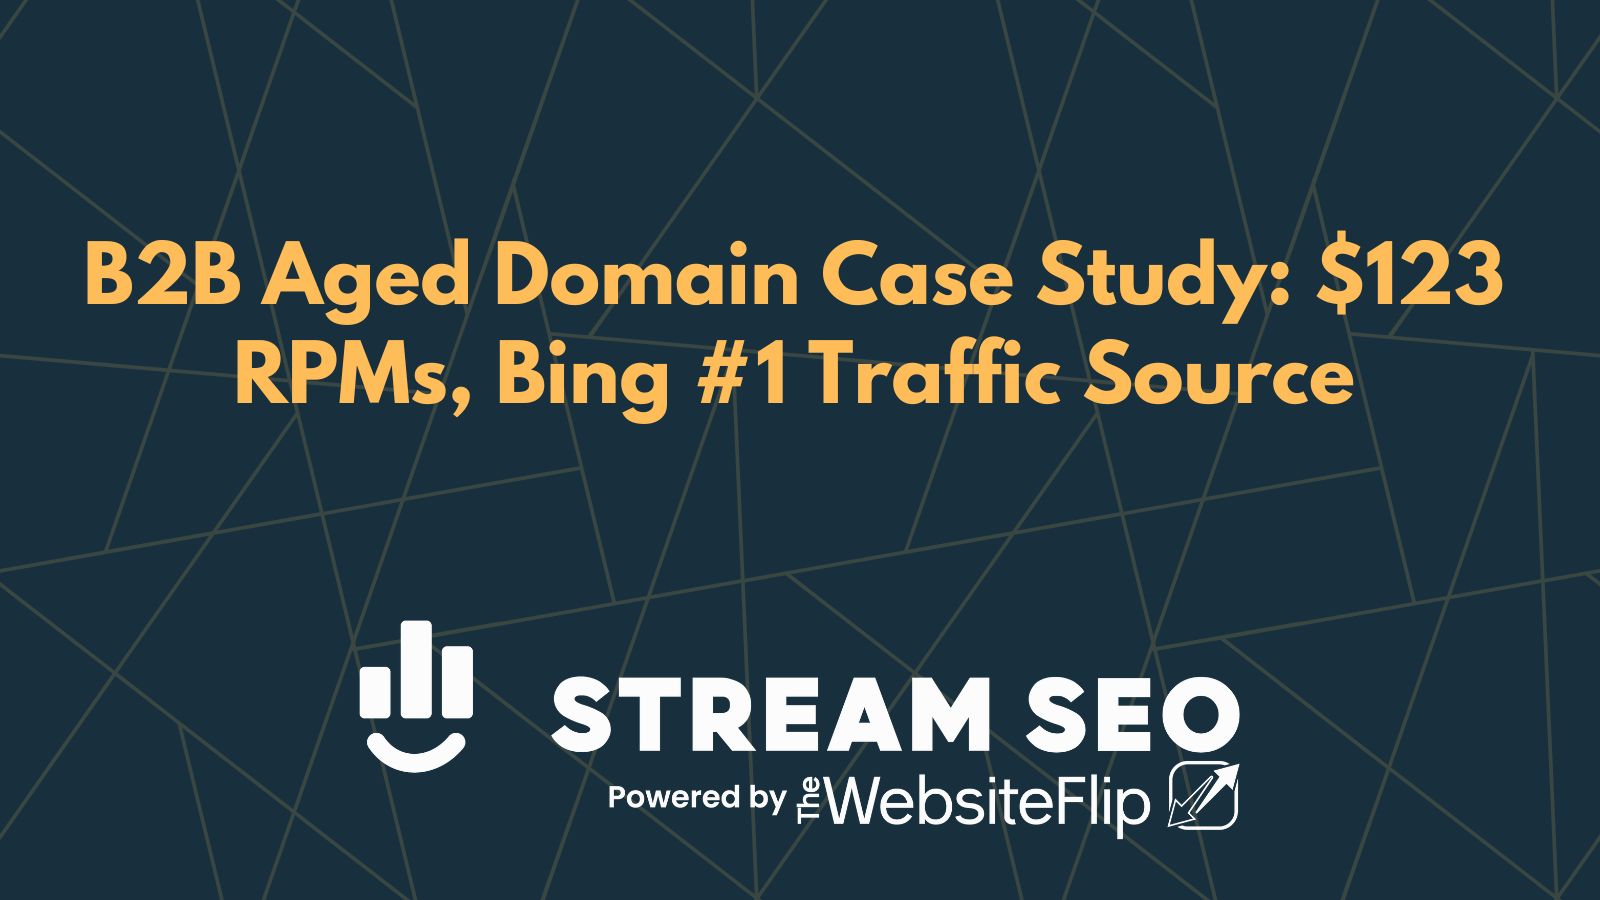 B2B Aged Domain Case Study: $123 RPMs, Bing #1 Traffic Source